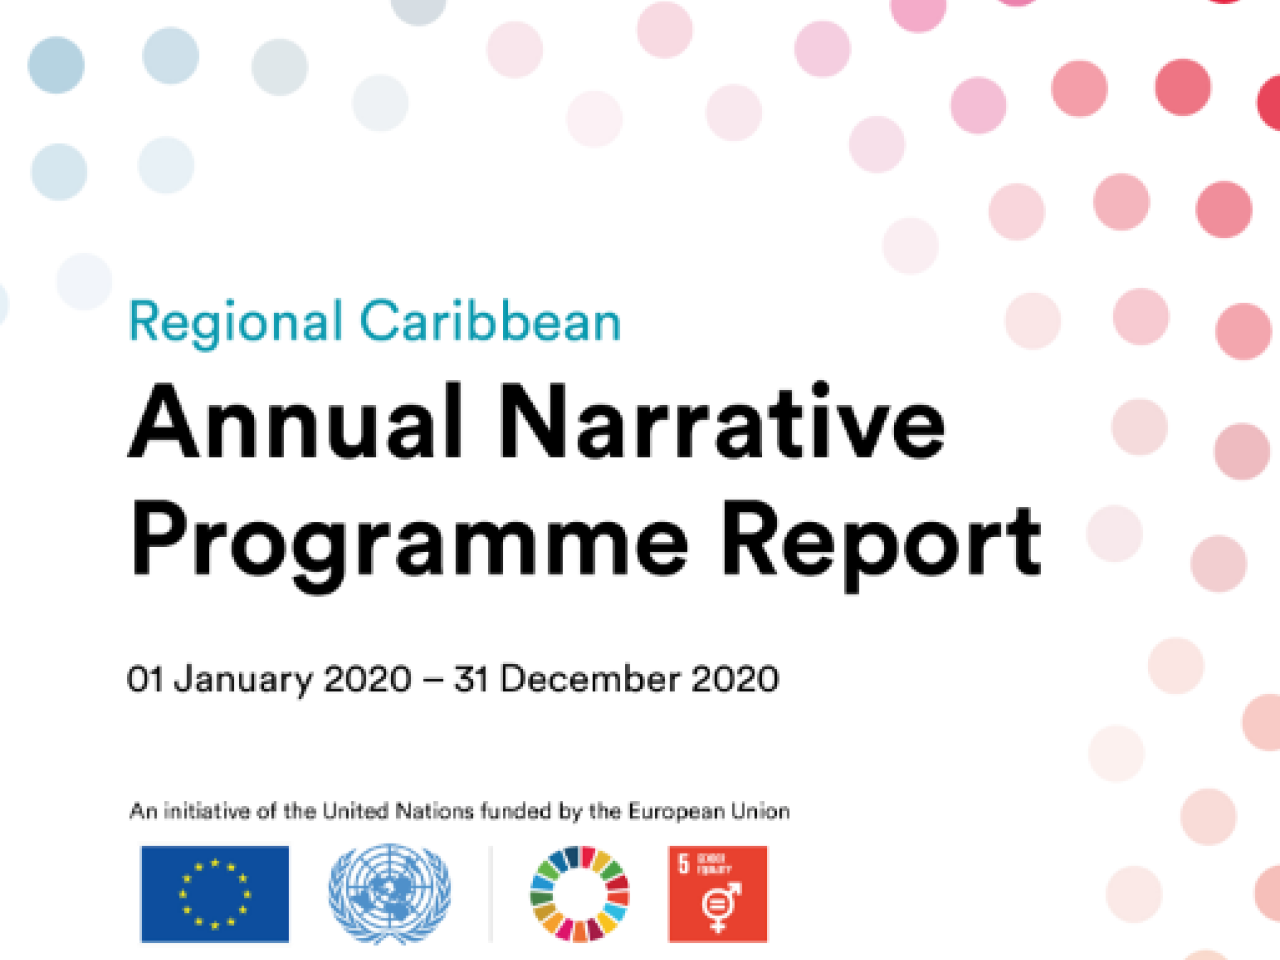 Regional Caribbean report cover